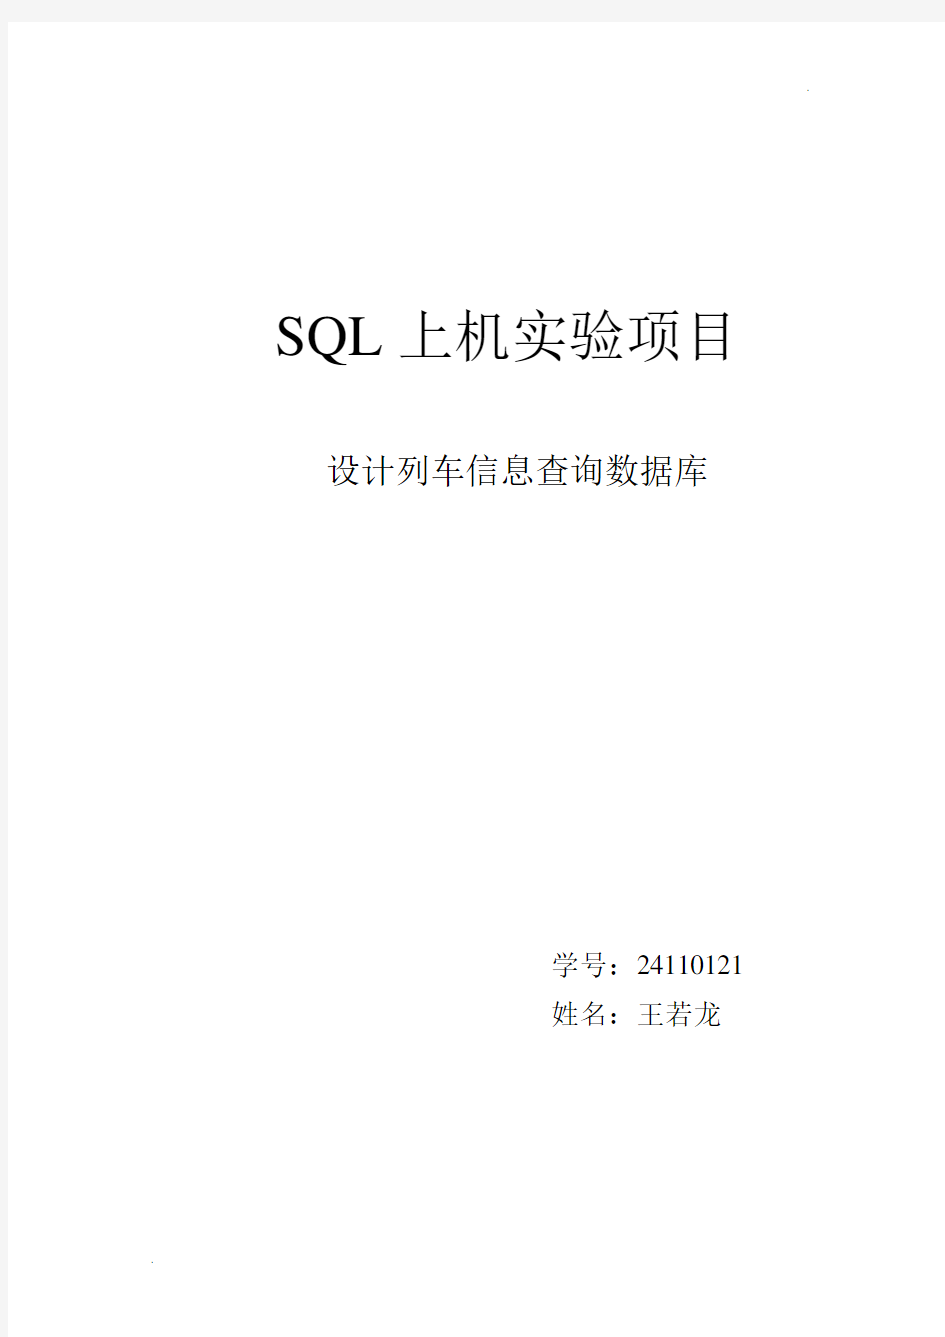 SQL数据库课程设计,火车票